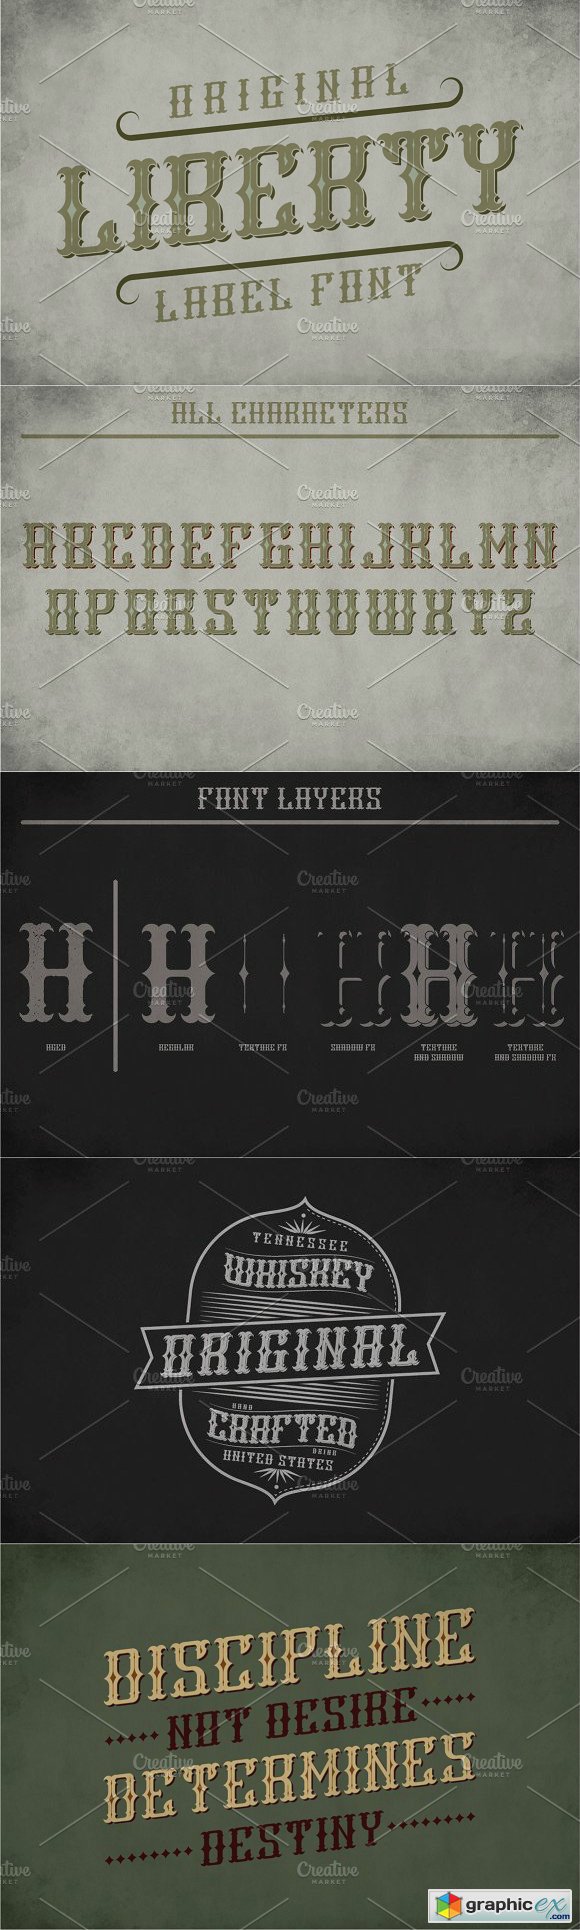 Liberty Label Typeface Font Display